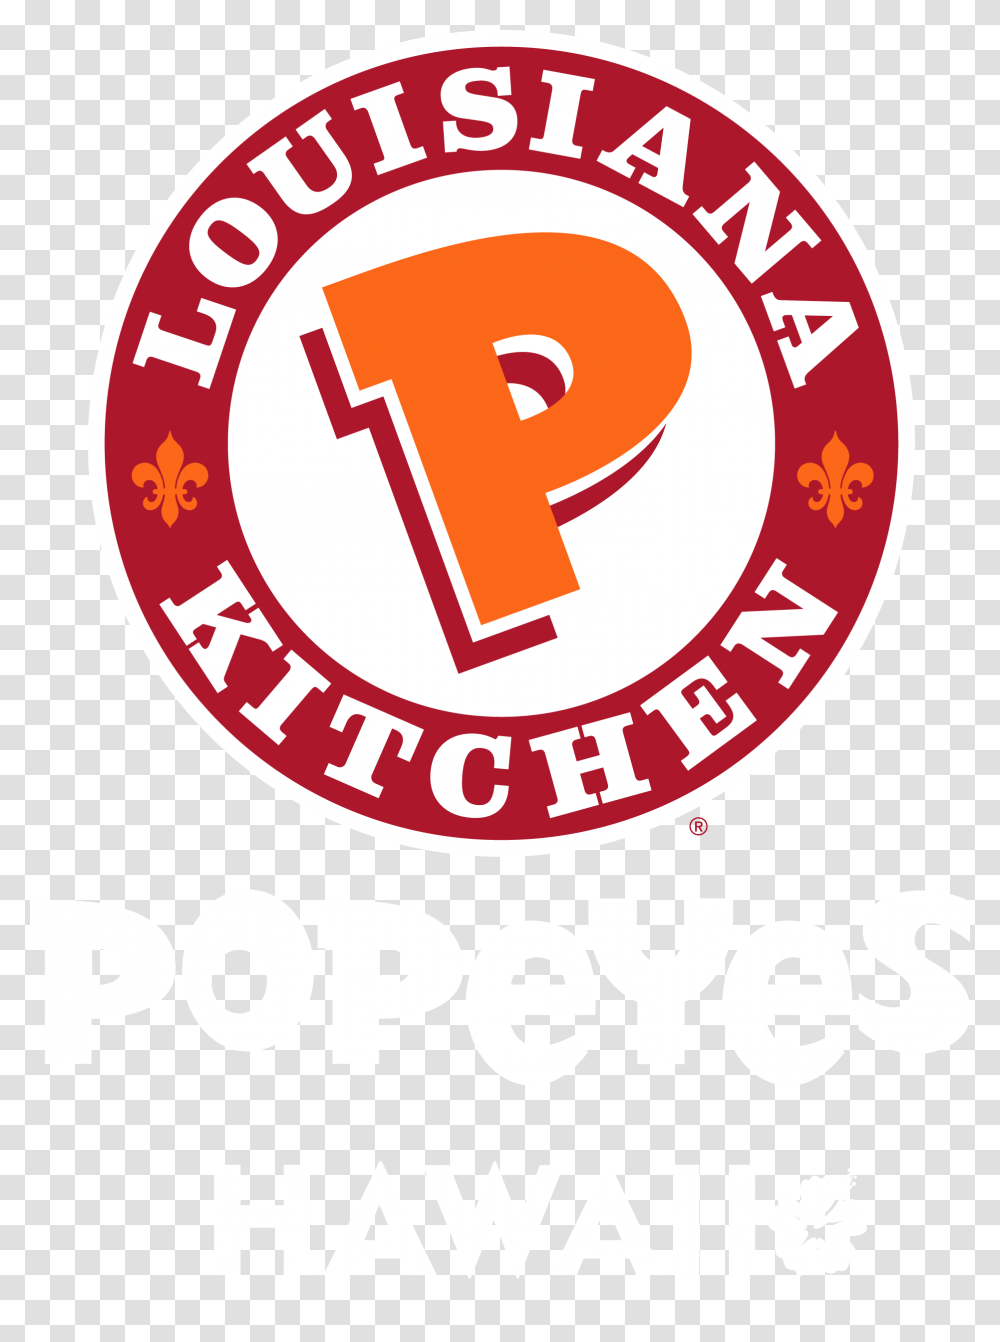 Popeyes Louisiana Kitchen Hawaii Bonafide Fried Chicken Tenders, Number, Logo Transparent Png